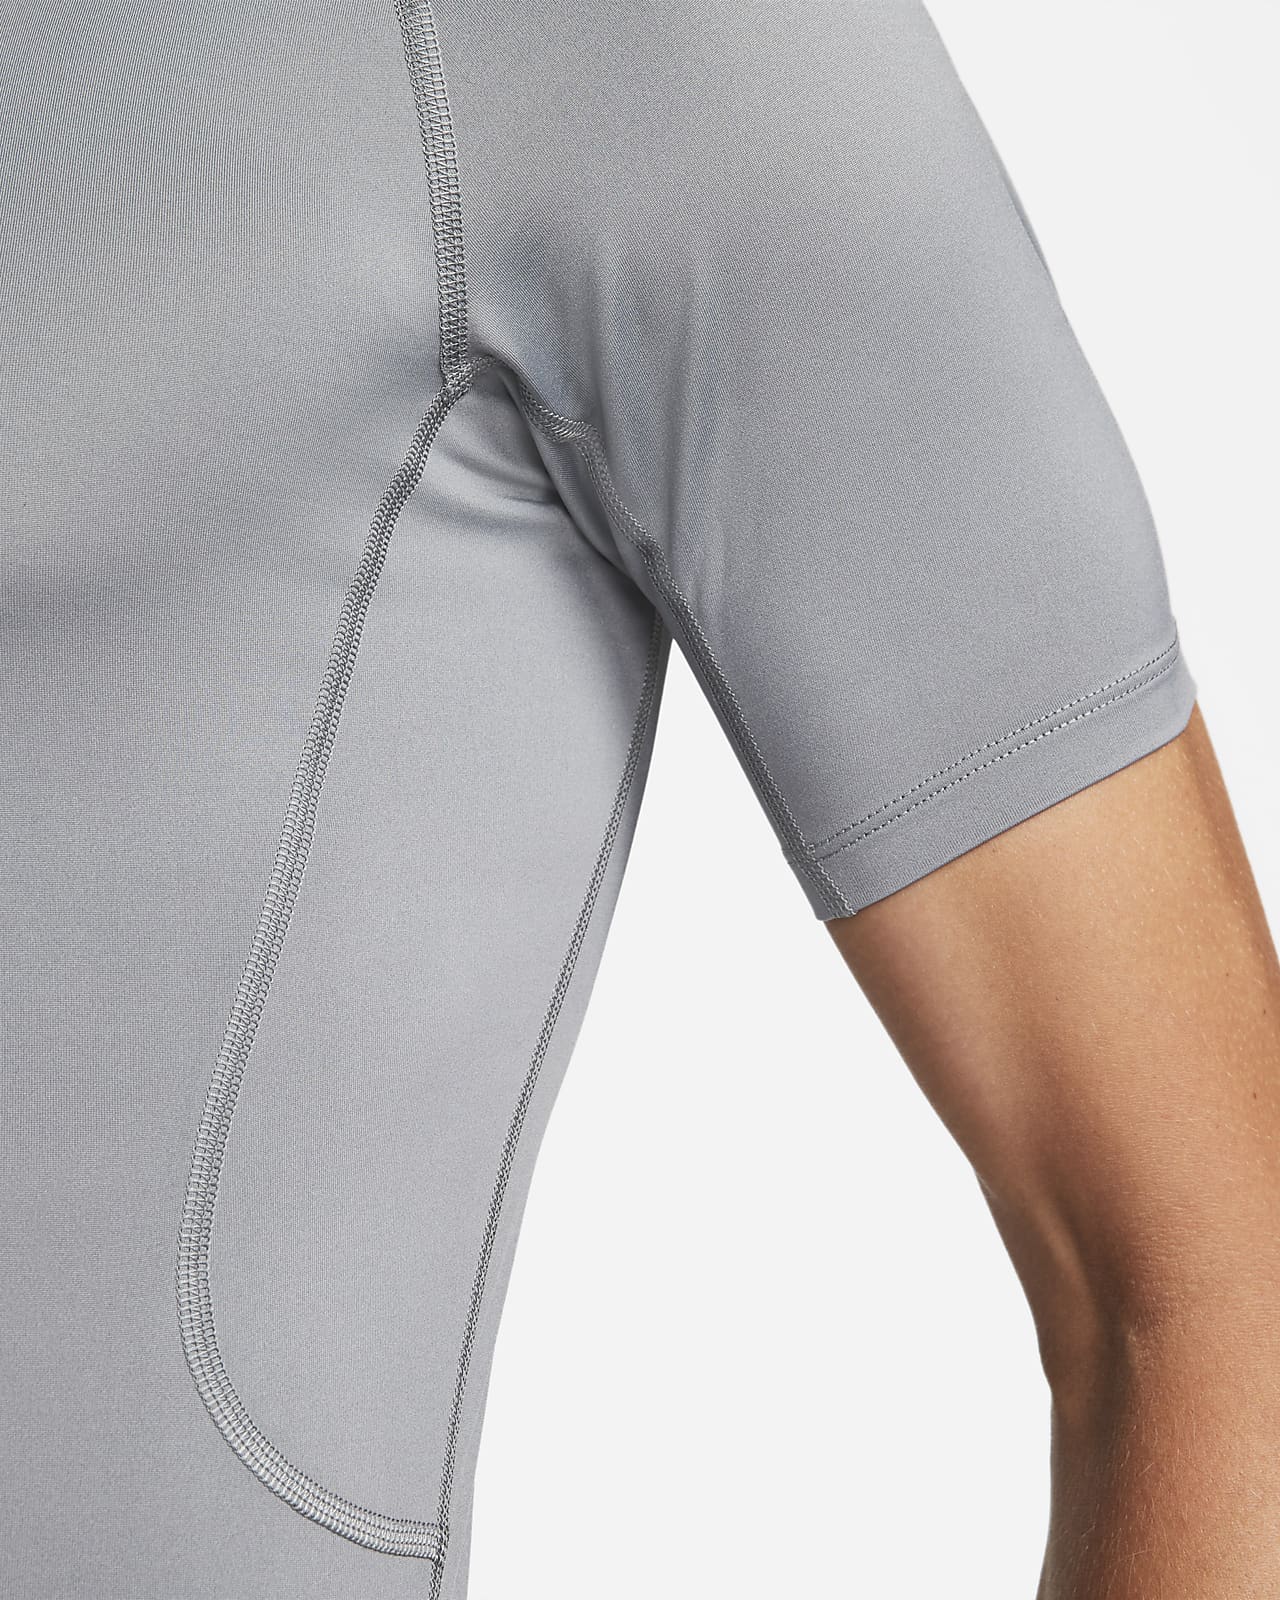 Nike Pro Men's Dri-FIT Tight Short-Sleeve Fitness Top. Nike IN